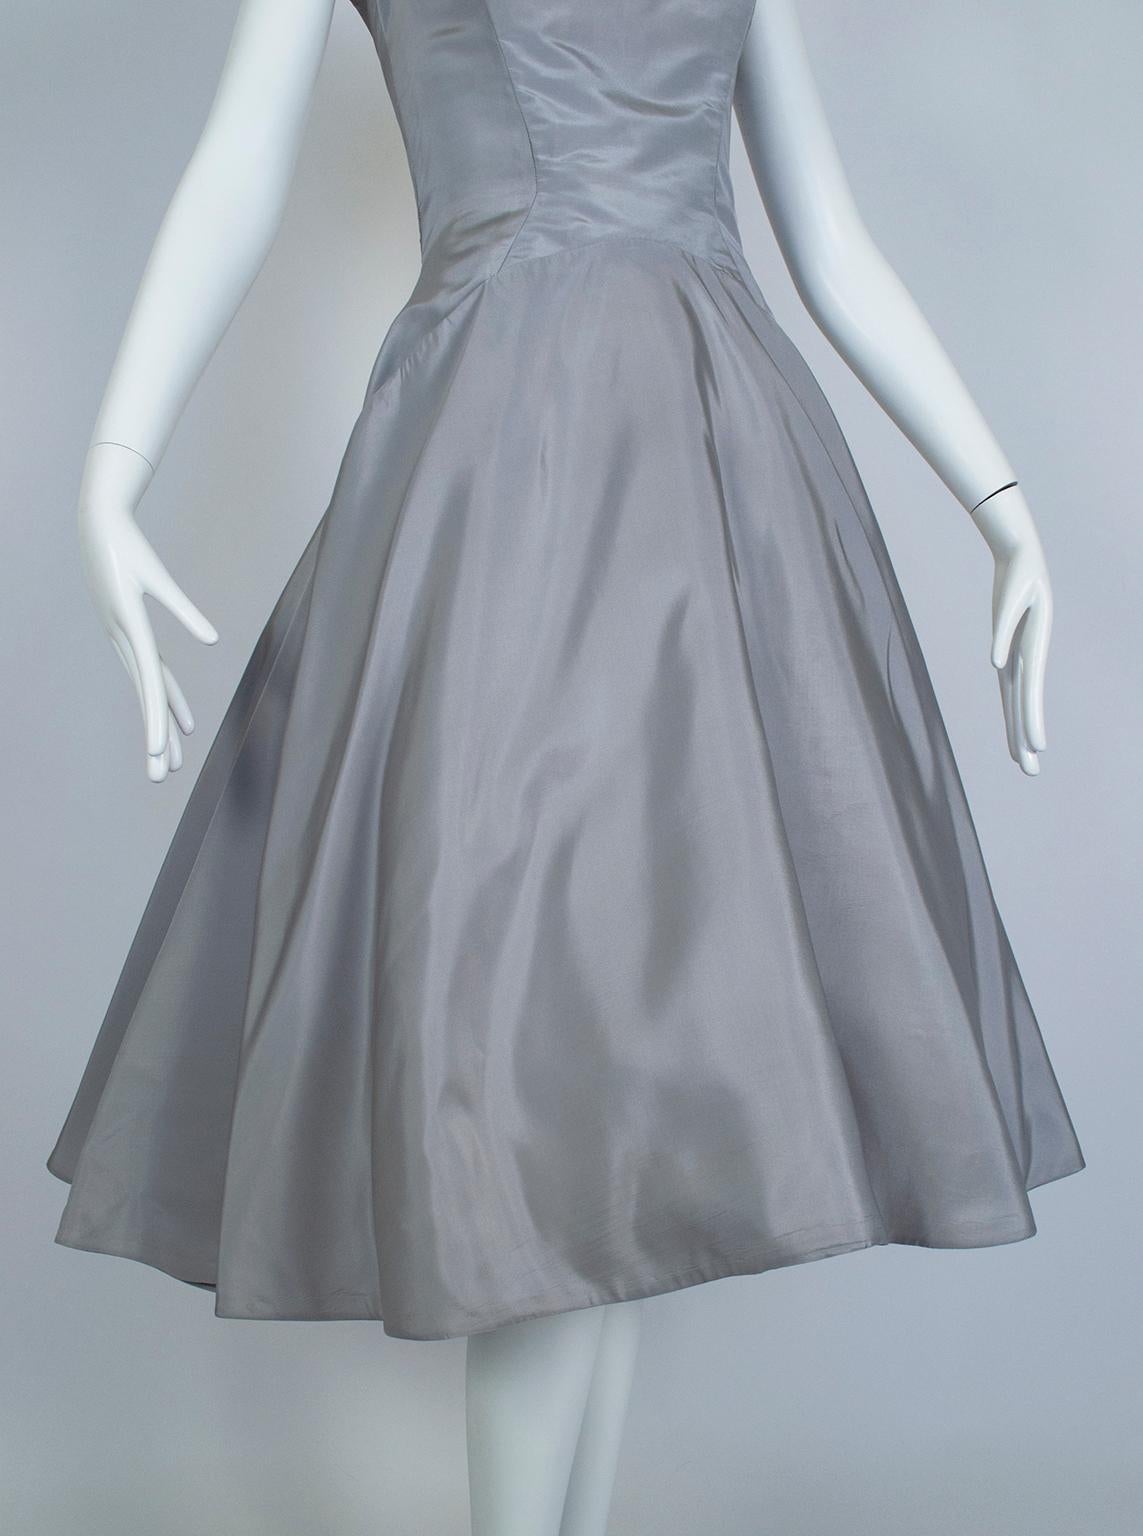 Werlé Beverly Hills Dove Gray Bib-Front Ballerina Dress - Medium, 1950s For Sale 4